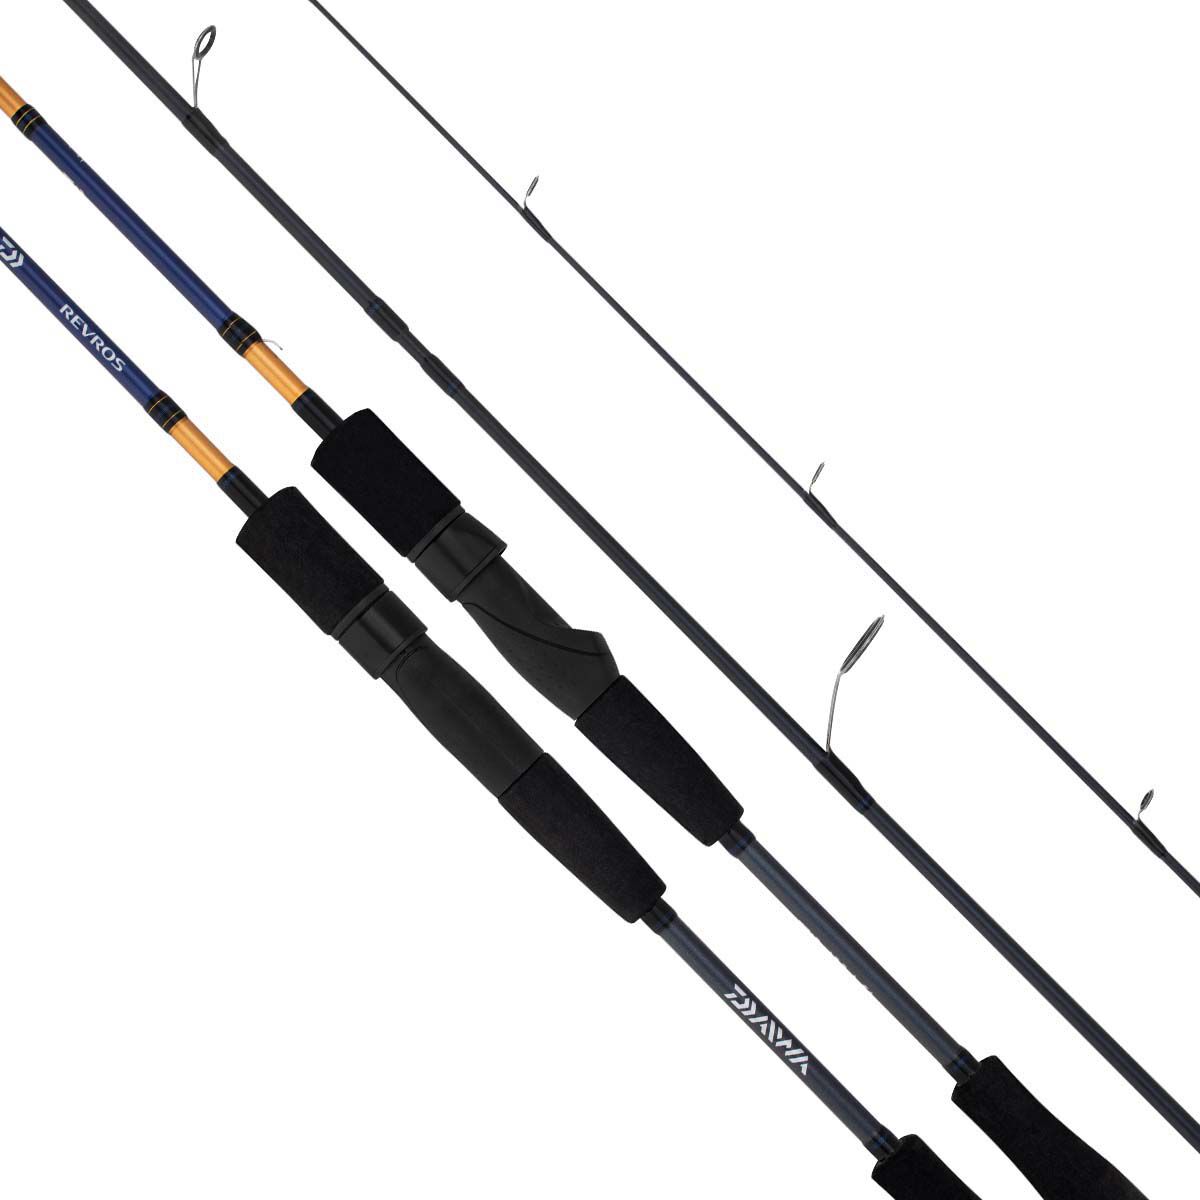 Fishing Rods for sale in Windsor, Victoria, Australia